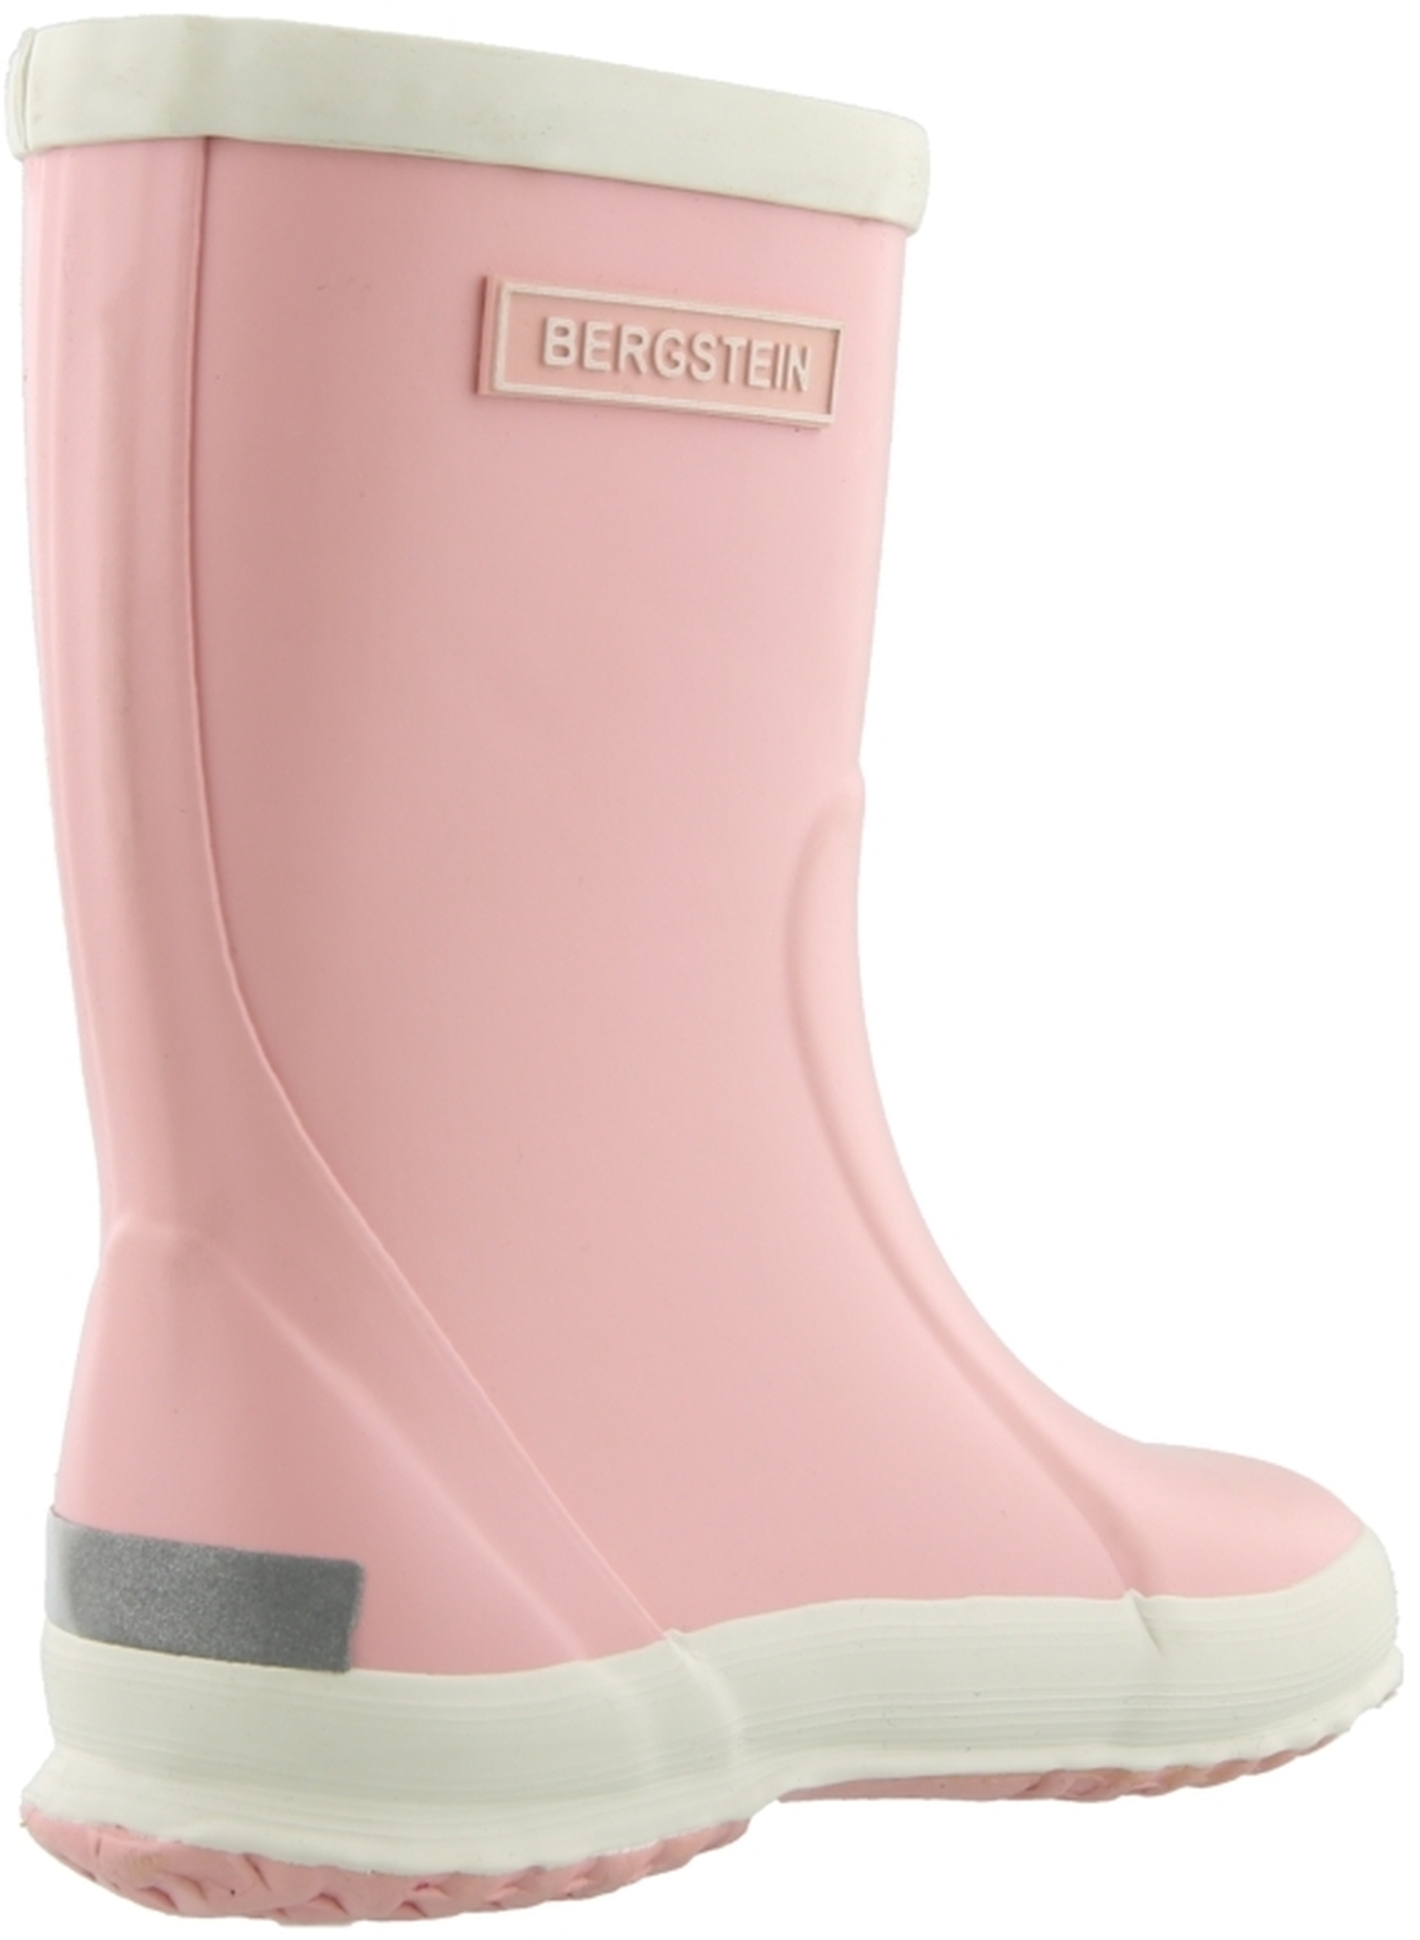 Bergstein Rainboot Soft Pink Kautschuk